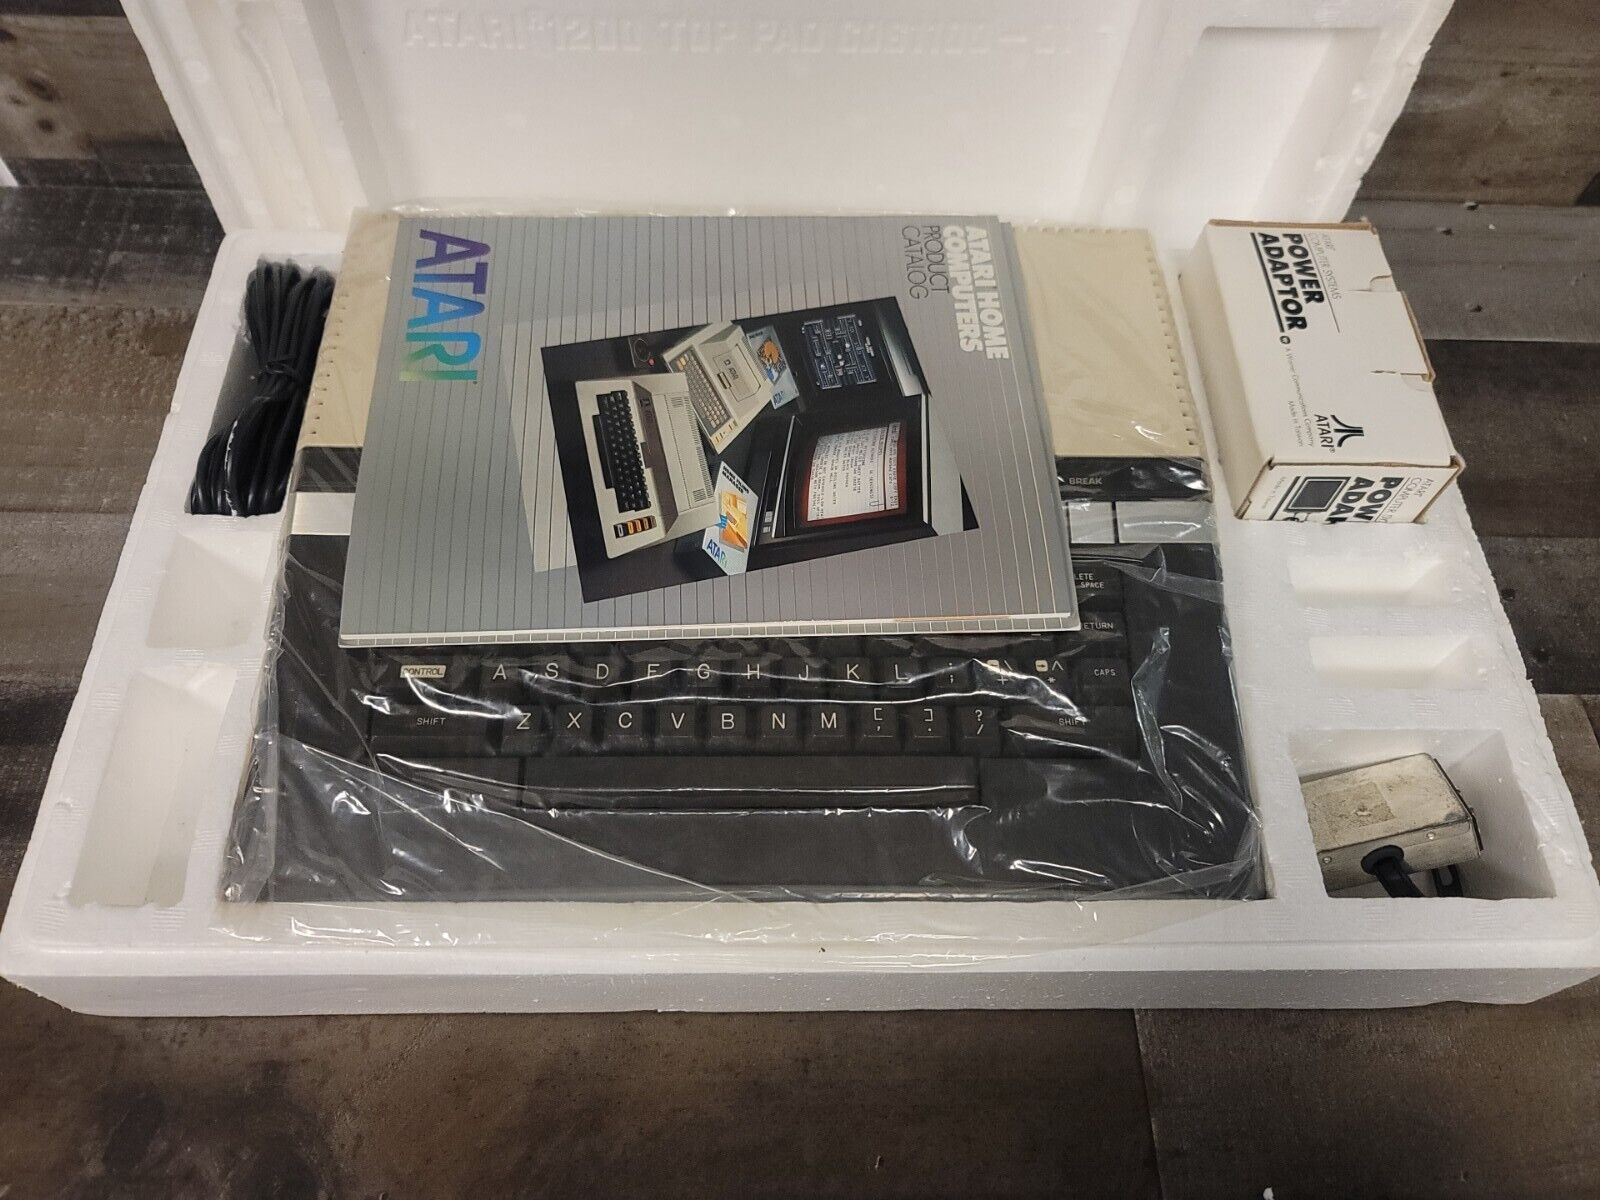 Atari 1200XL Home Computer In Original Box